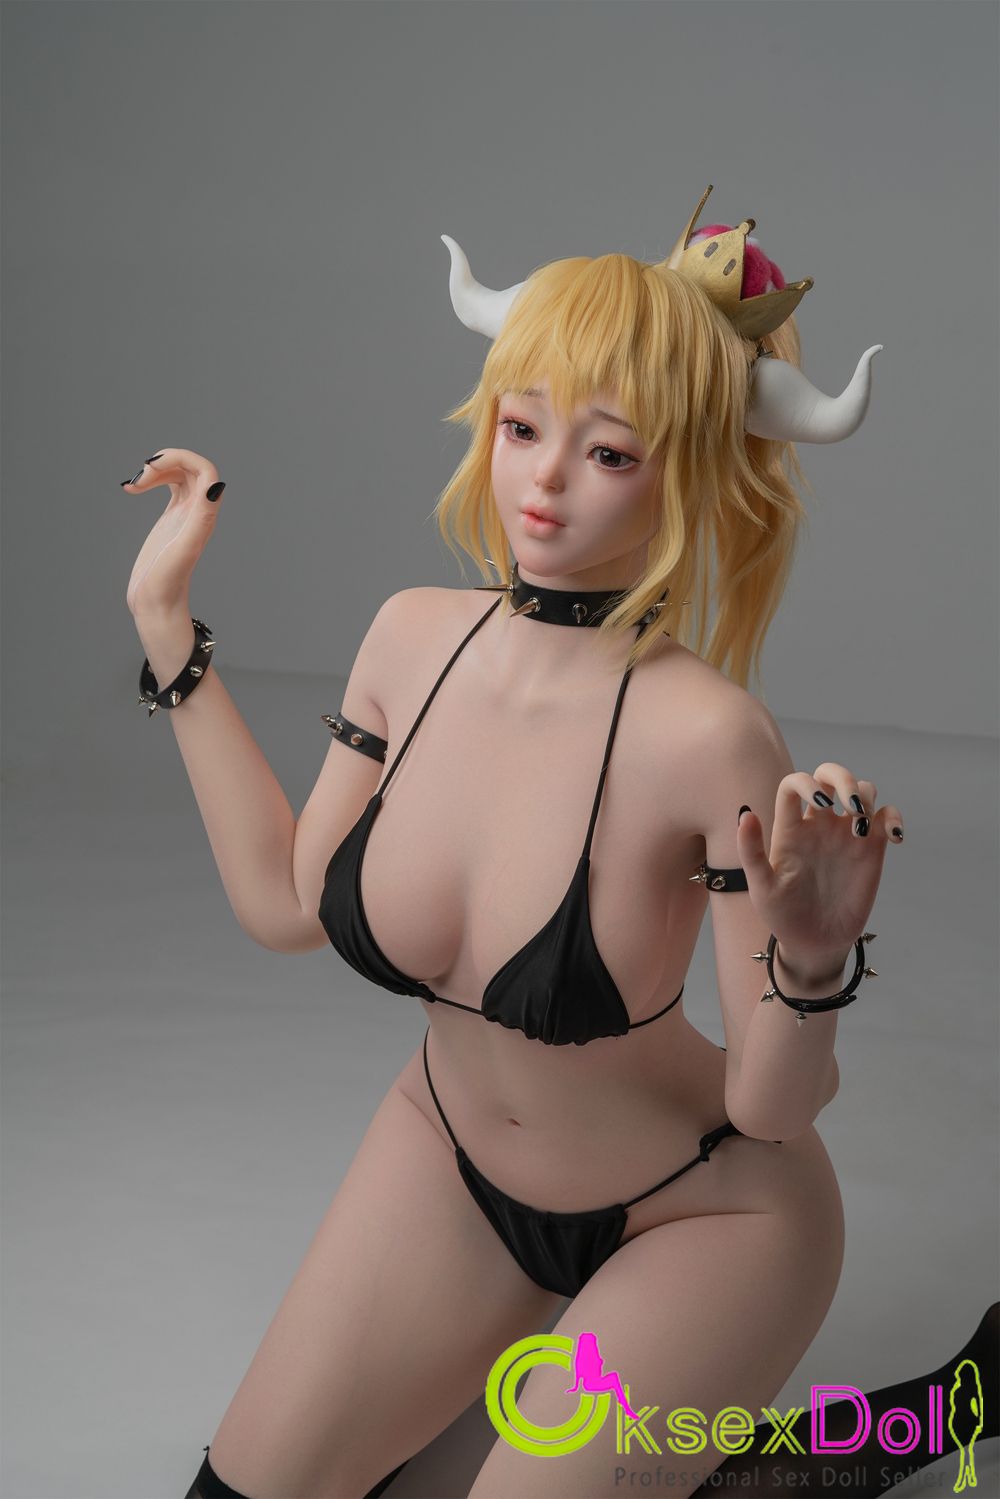 Blond sex dolls images